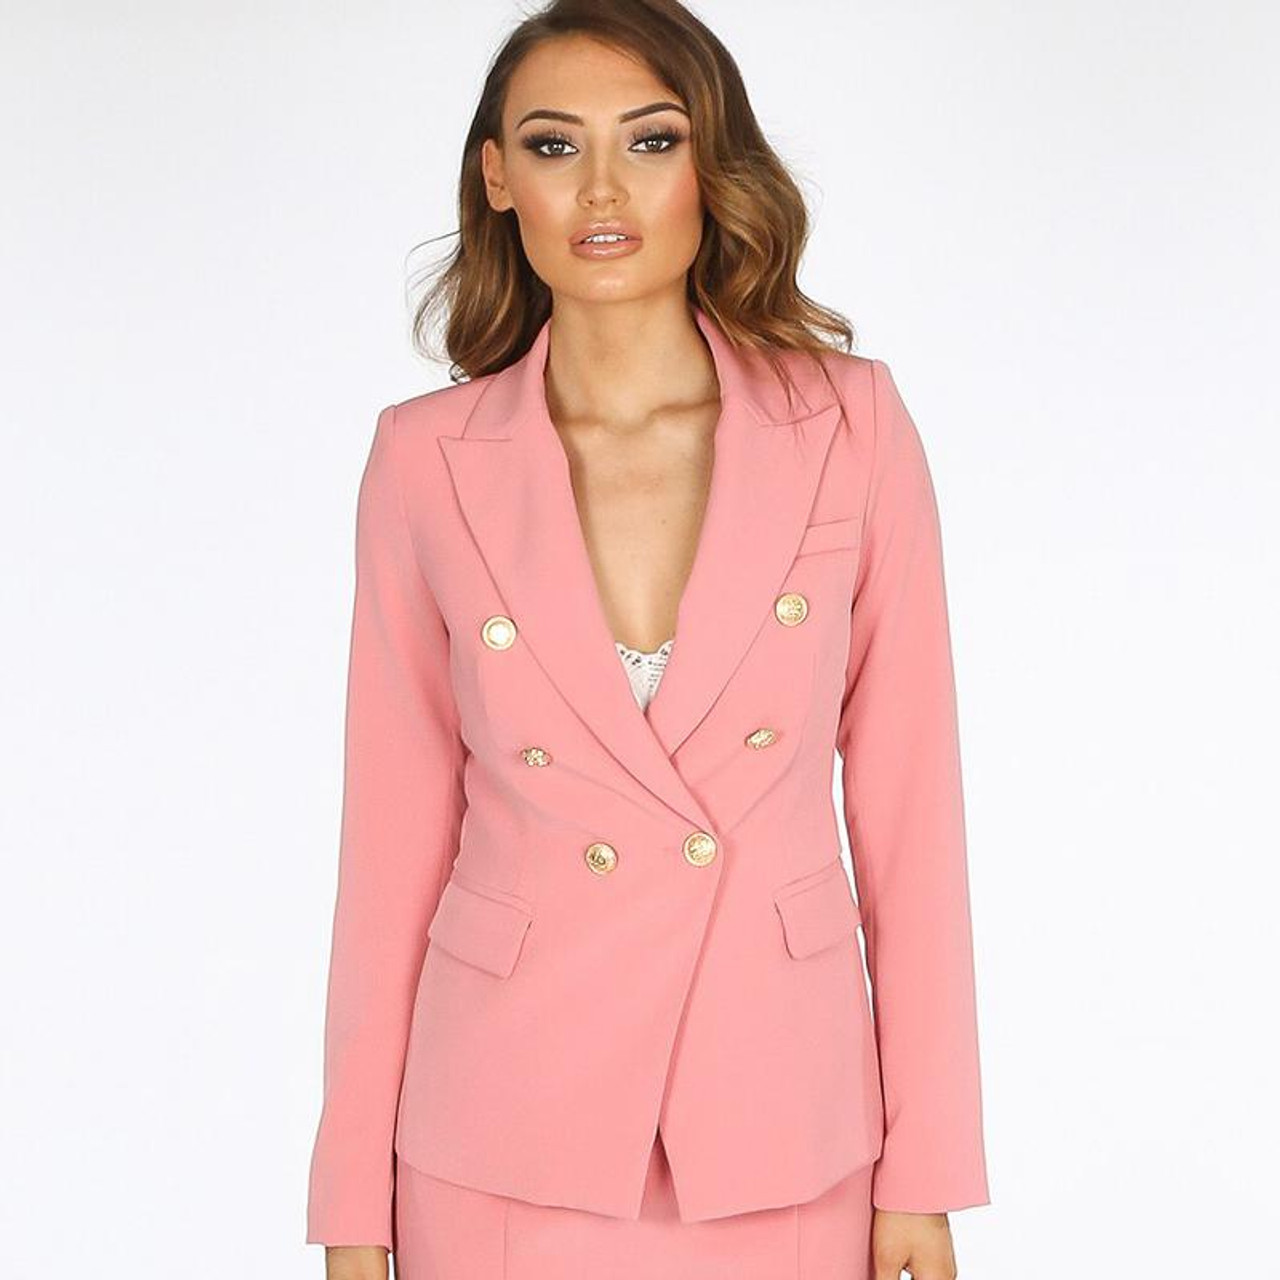 anekdote Støt Gå tilbage Victoria Balmain Inspired Tailored Blazer - Blush Pink - Style Of Beyond